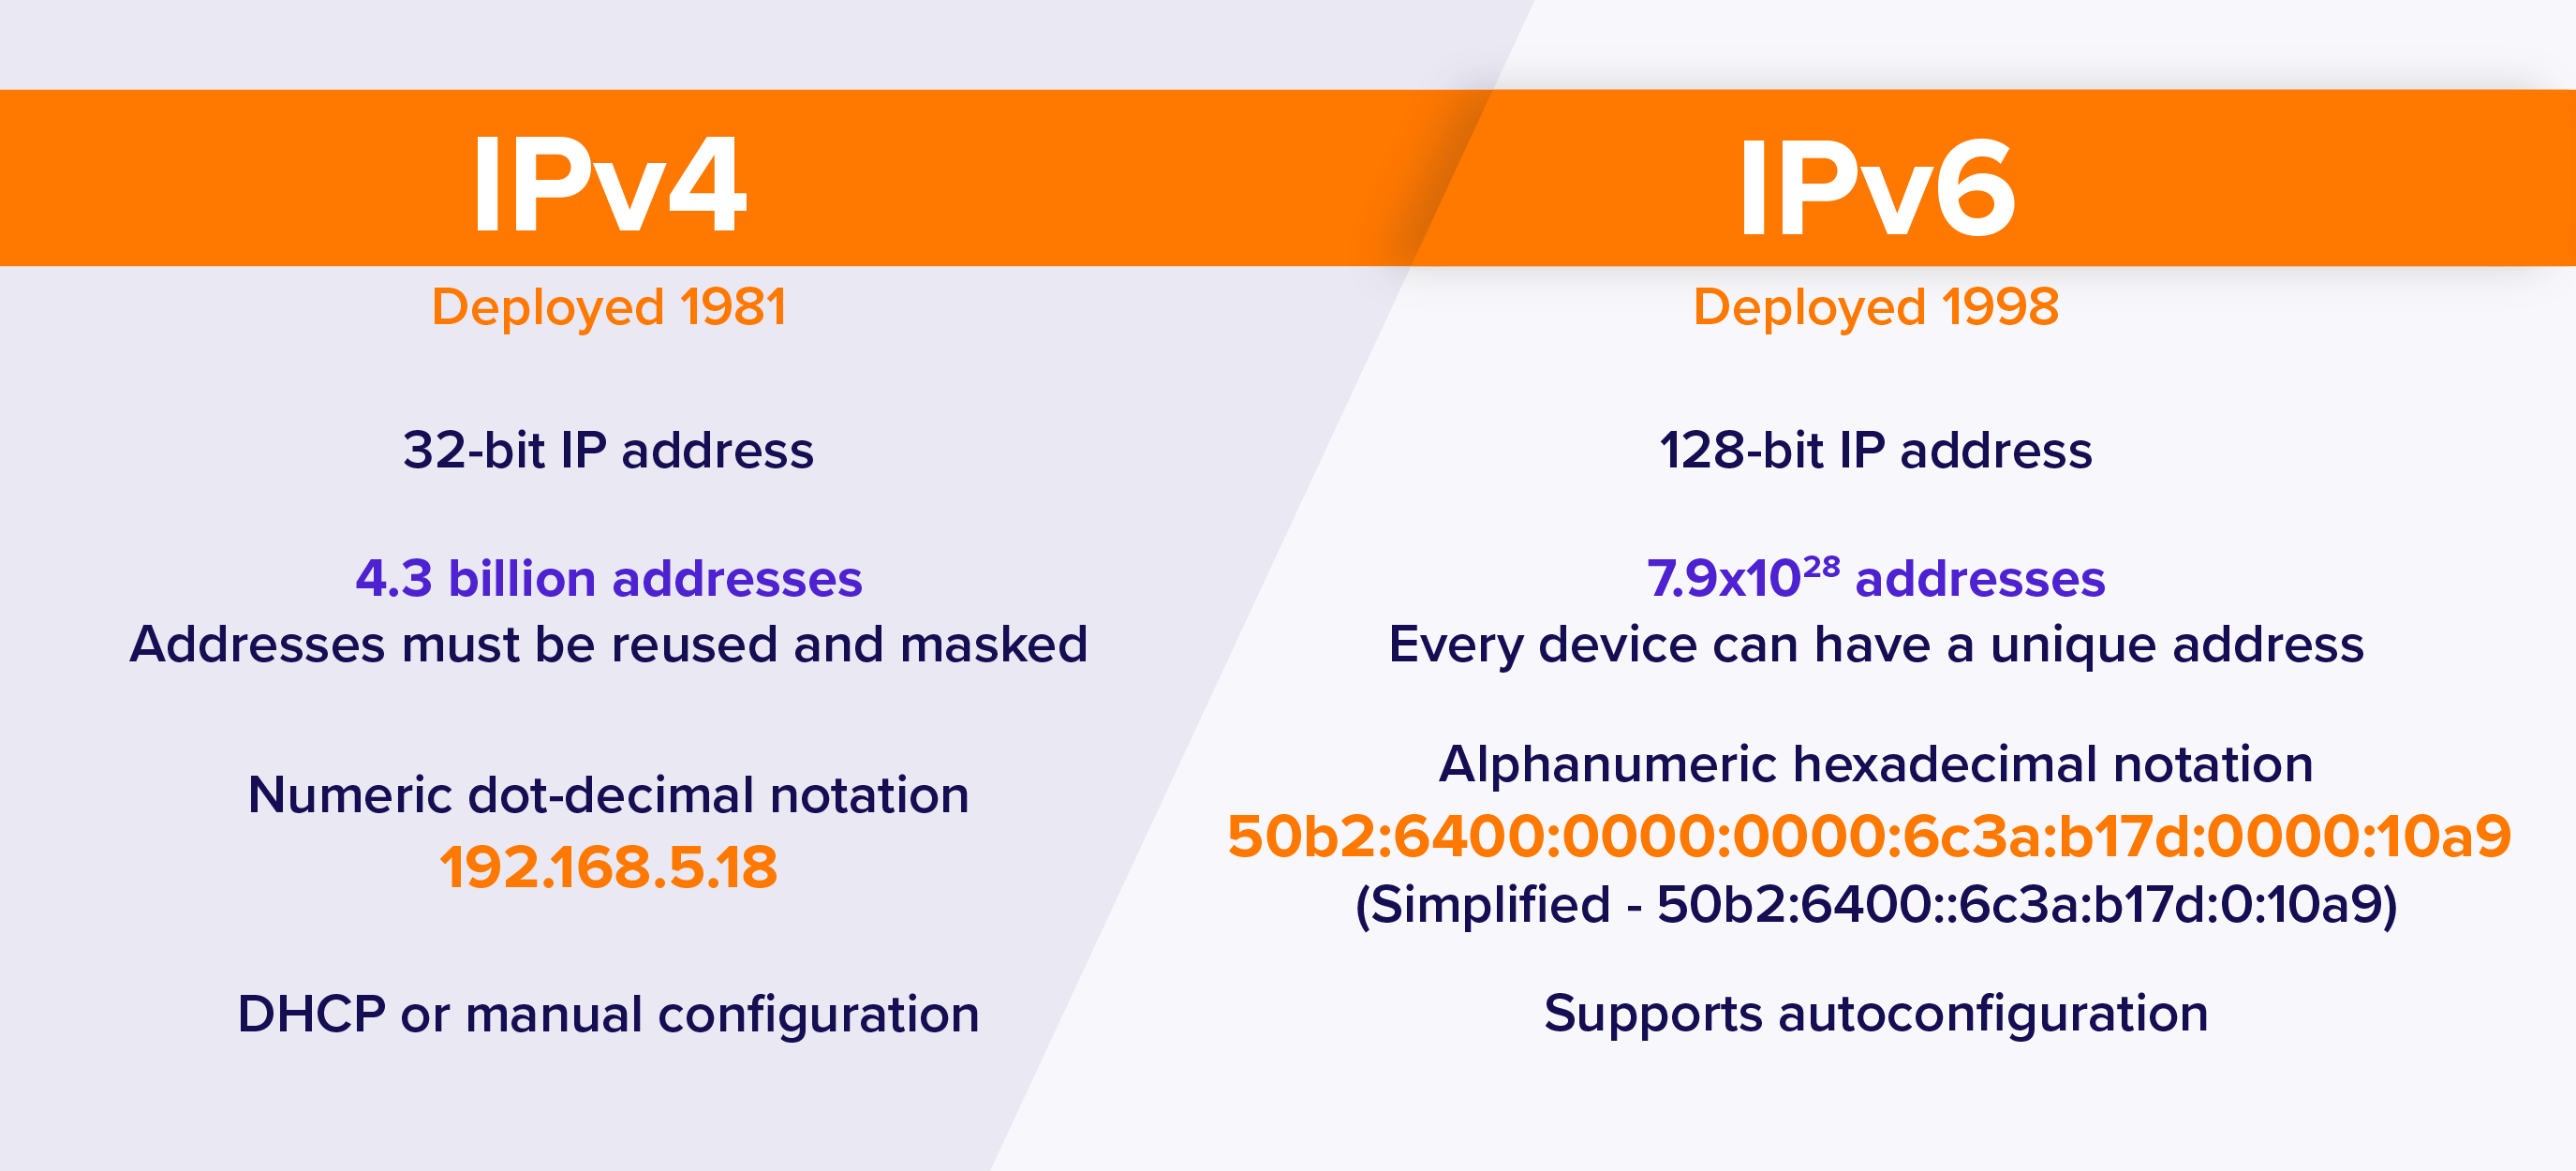 Comparing IPV4 and IPV6